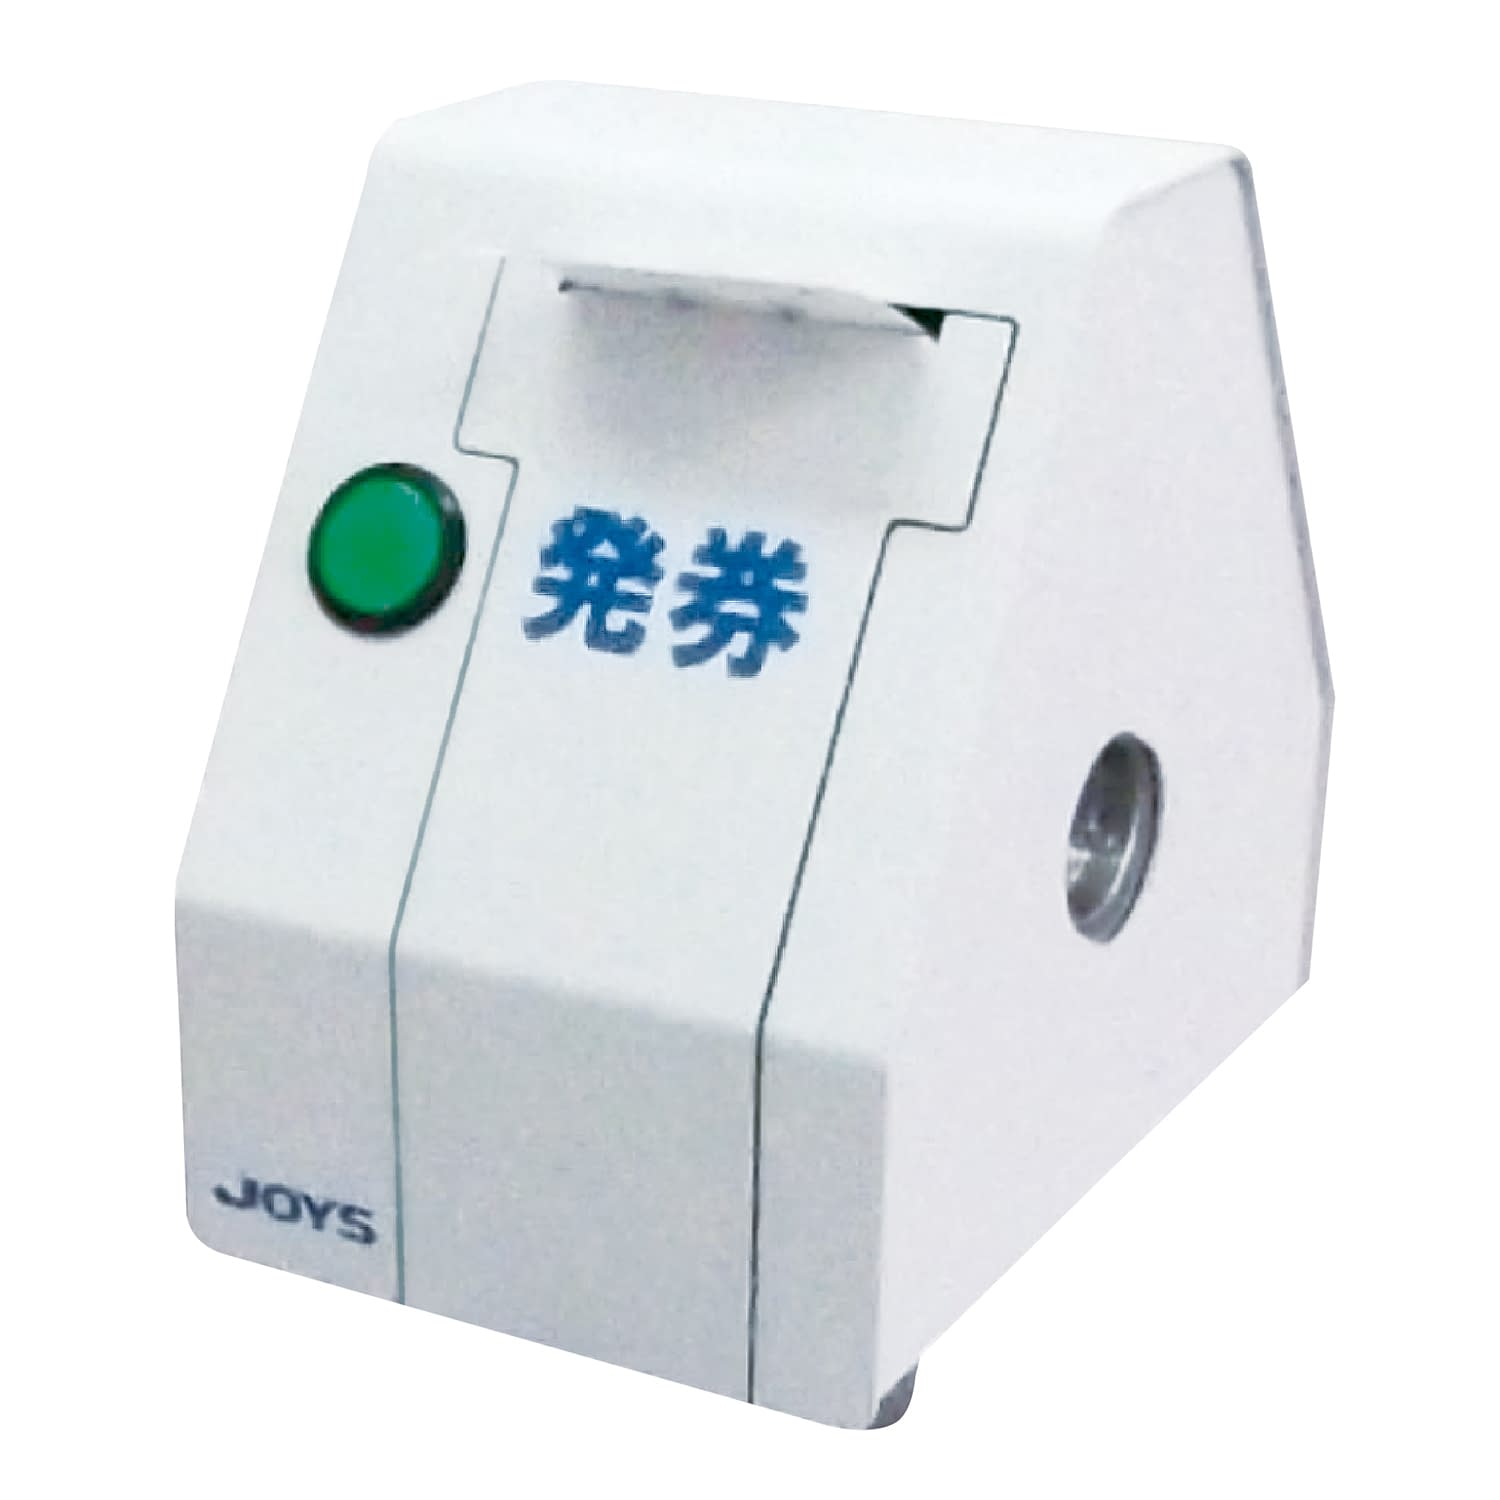 (24-3842-01)小型番号発券機（ボタン式発券仕様） JP-10KB ｺｶﾞﾀﾊﾞﾝｺﾞｳﾊｯｹﾝｷﾎﾞﾀﾝ【1台単位】【2019年カタログ商品】